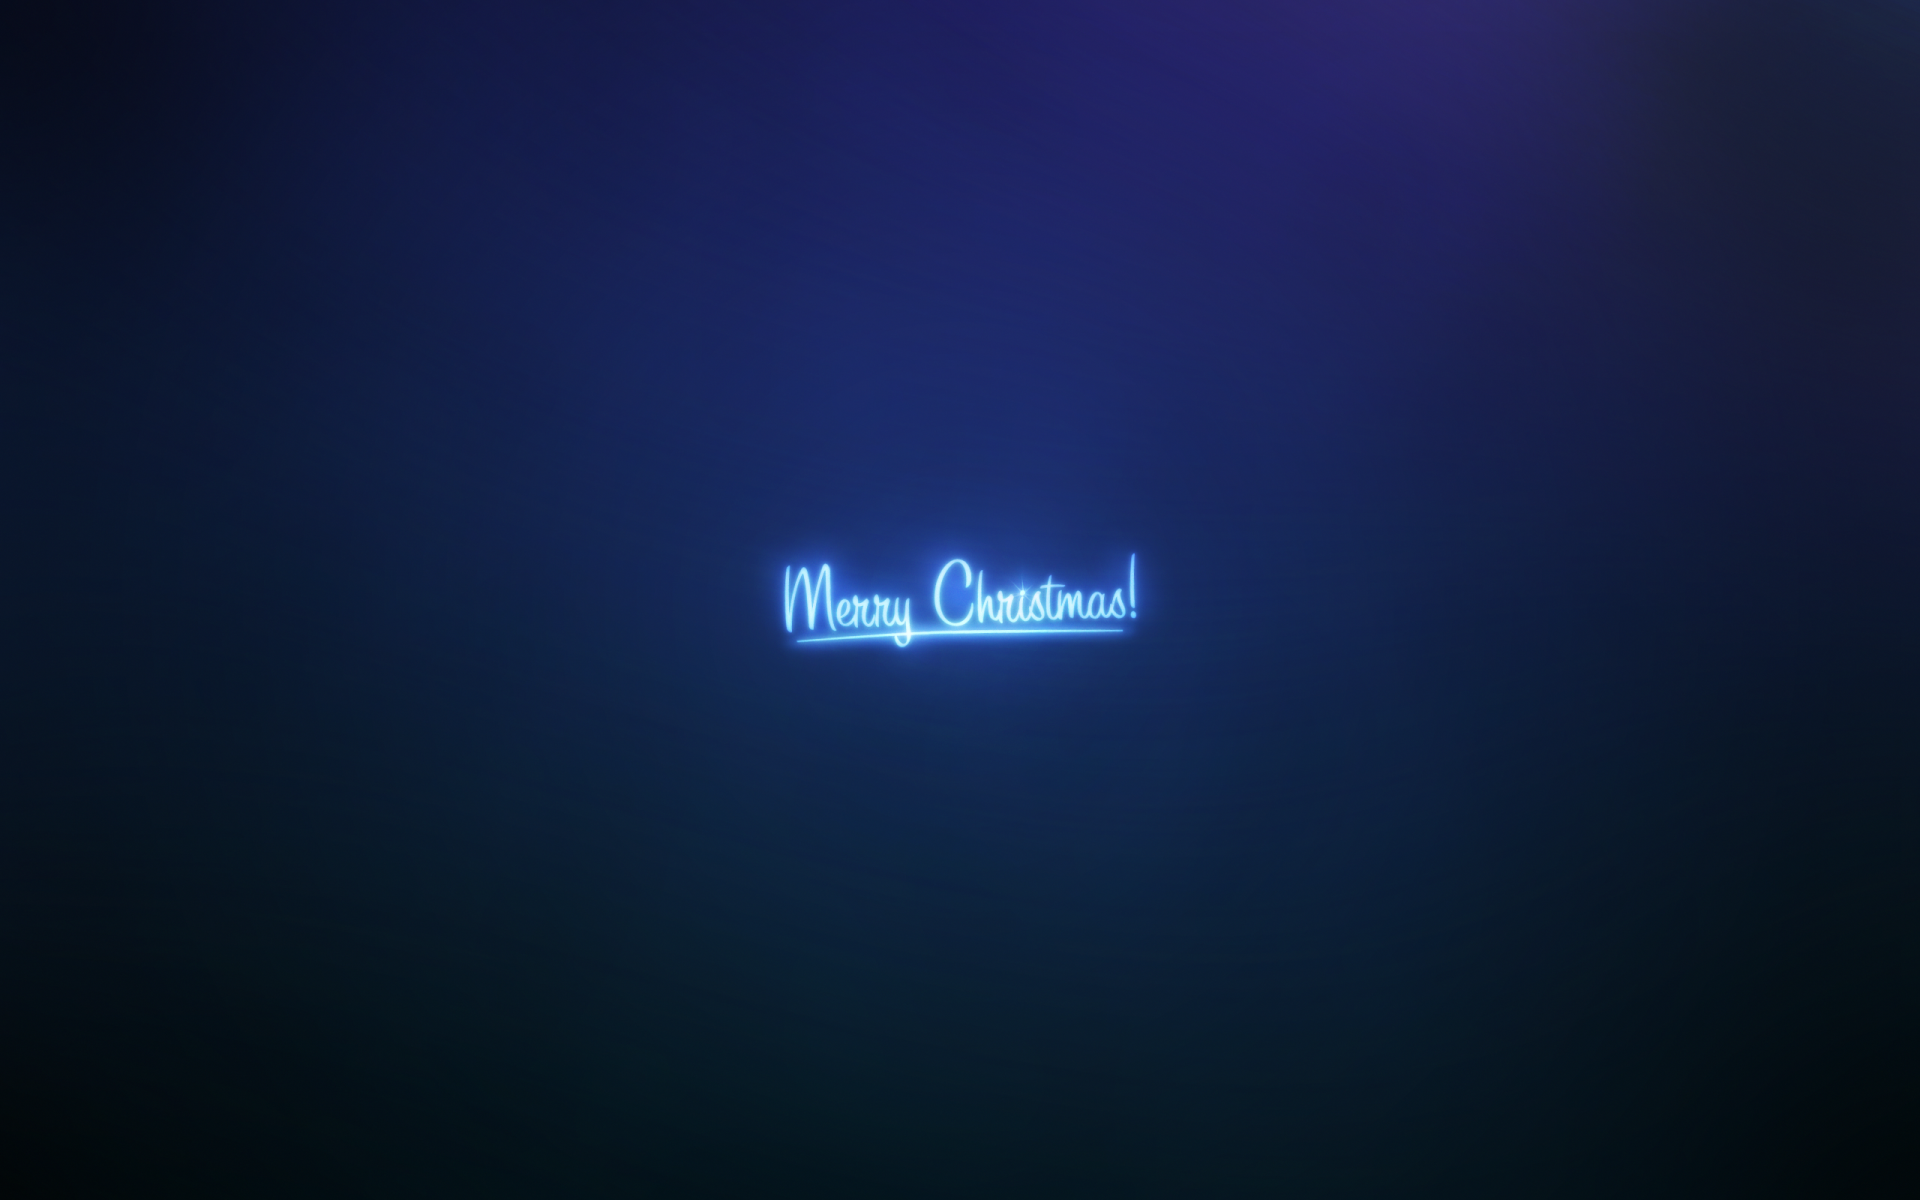 Merry Christmas Wallpaper Desktop Pc And Mac